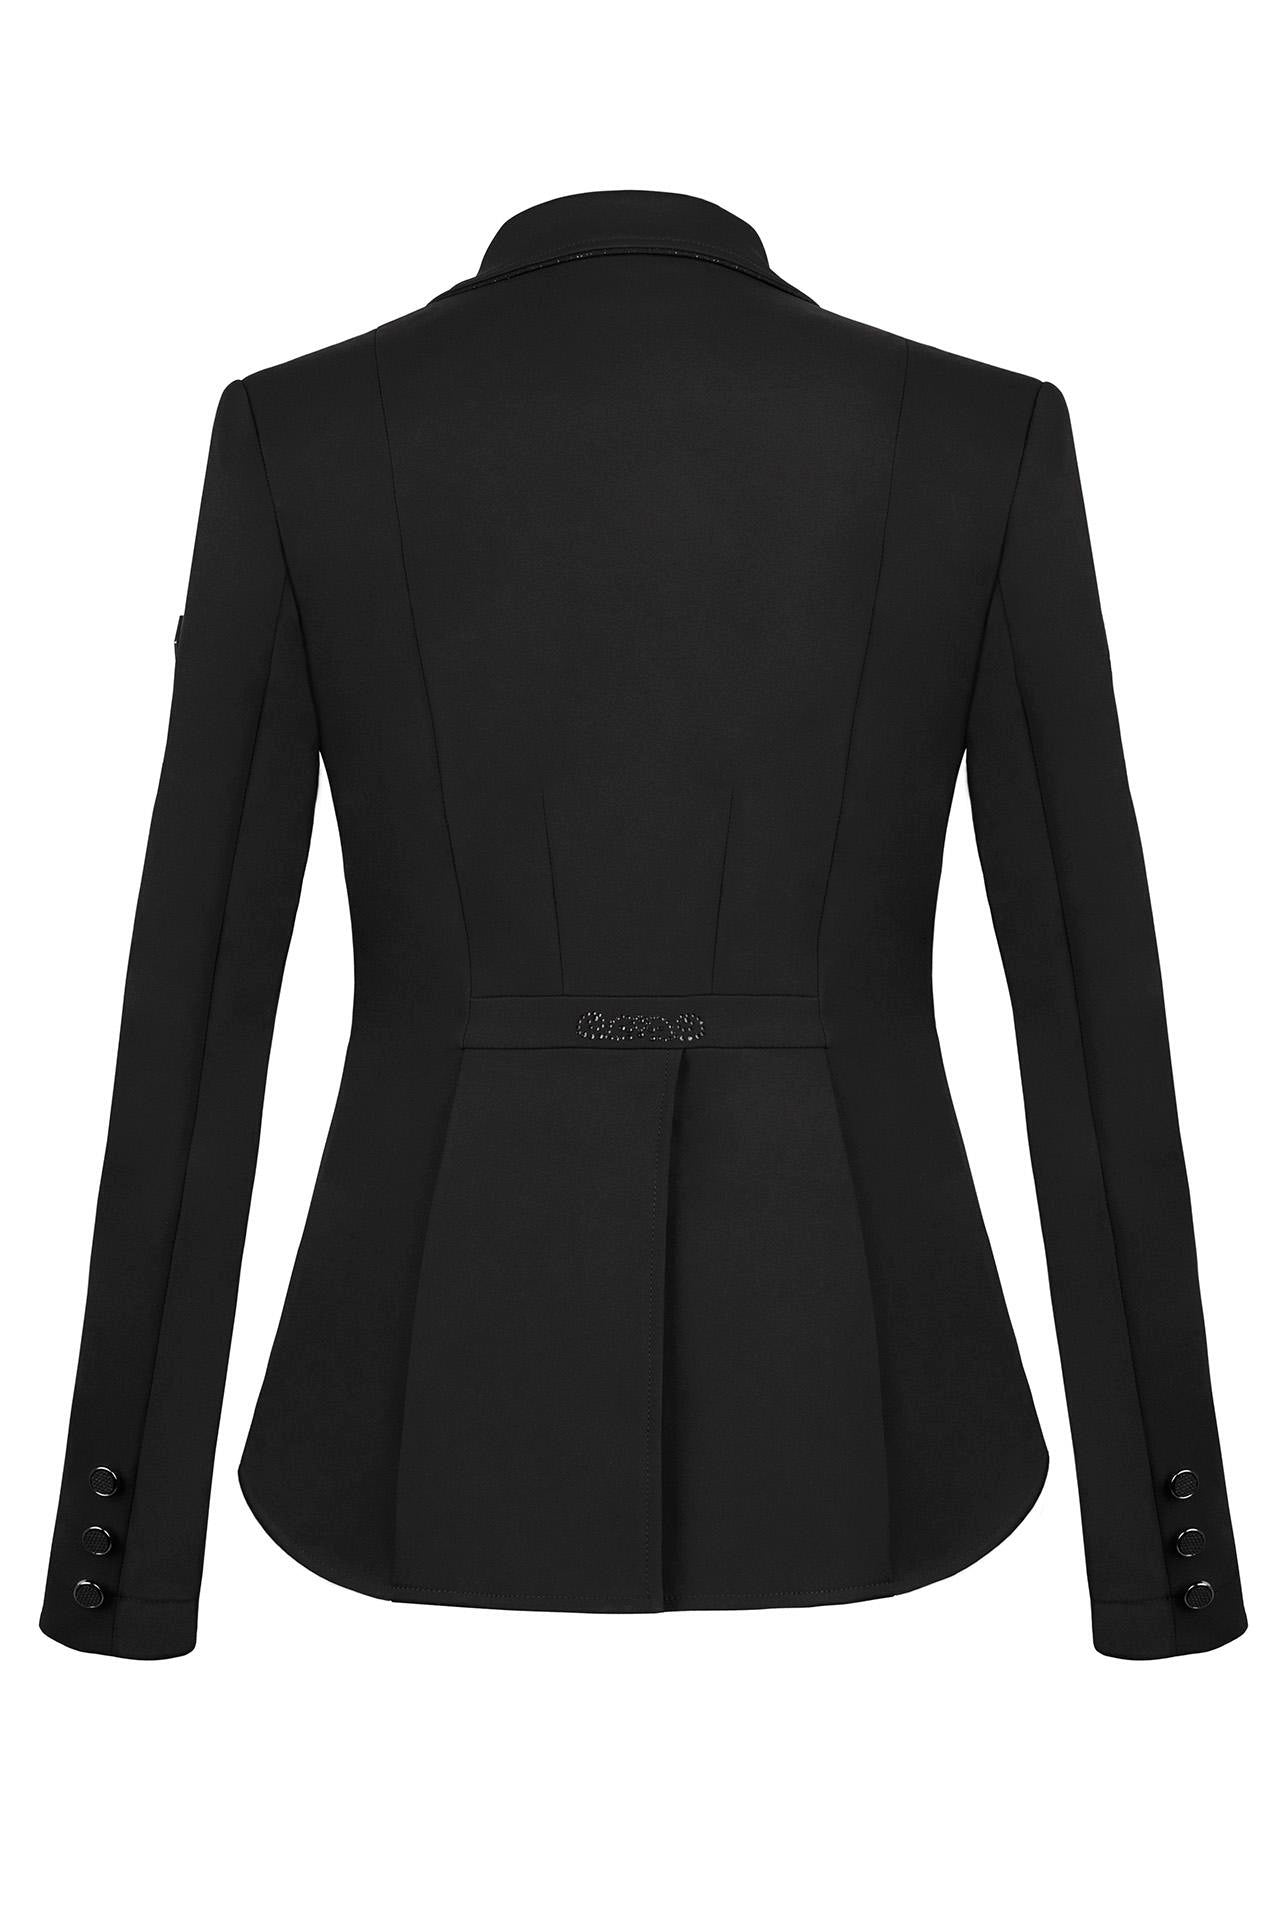 Black dressage show jacket